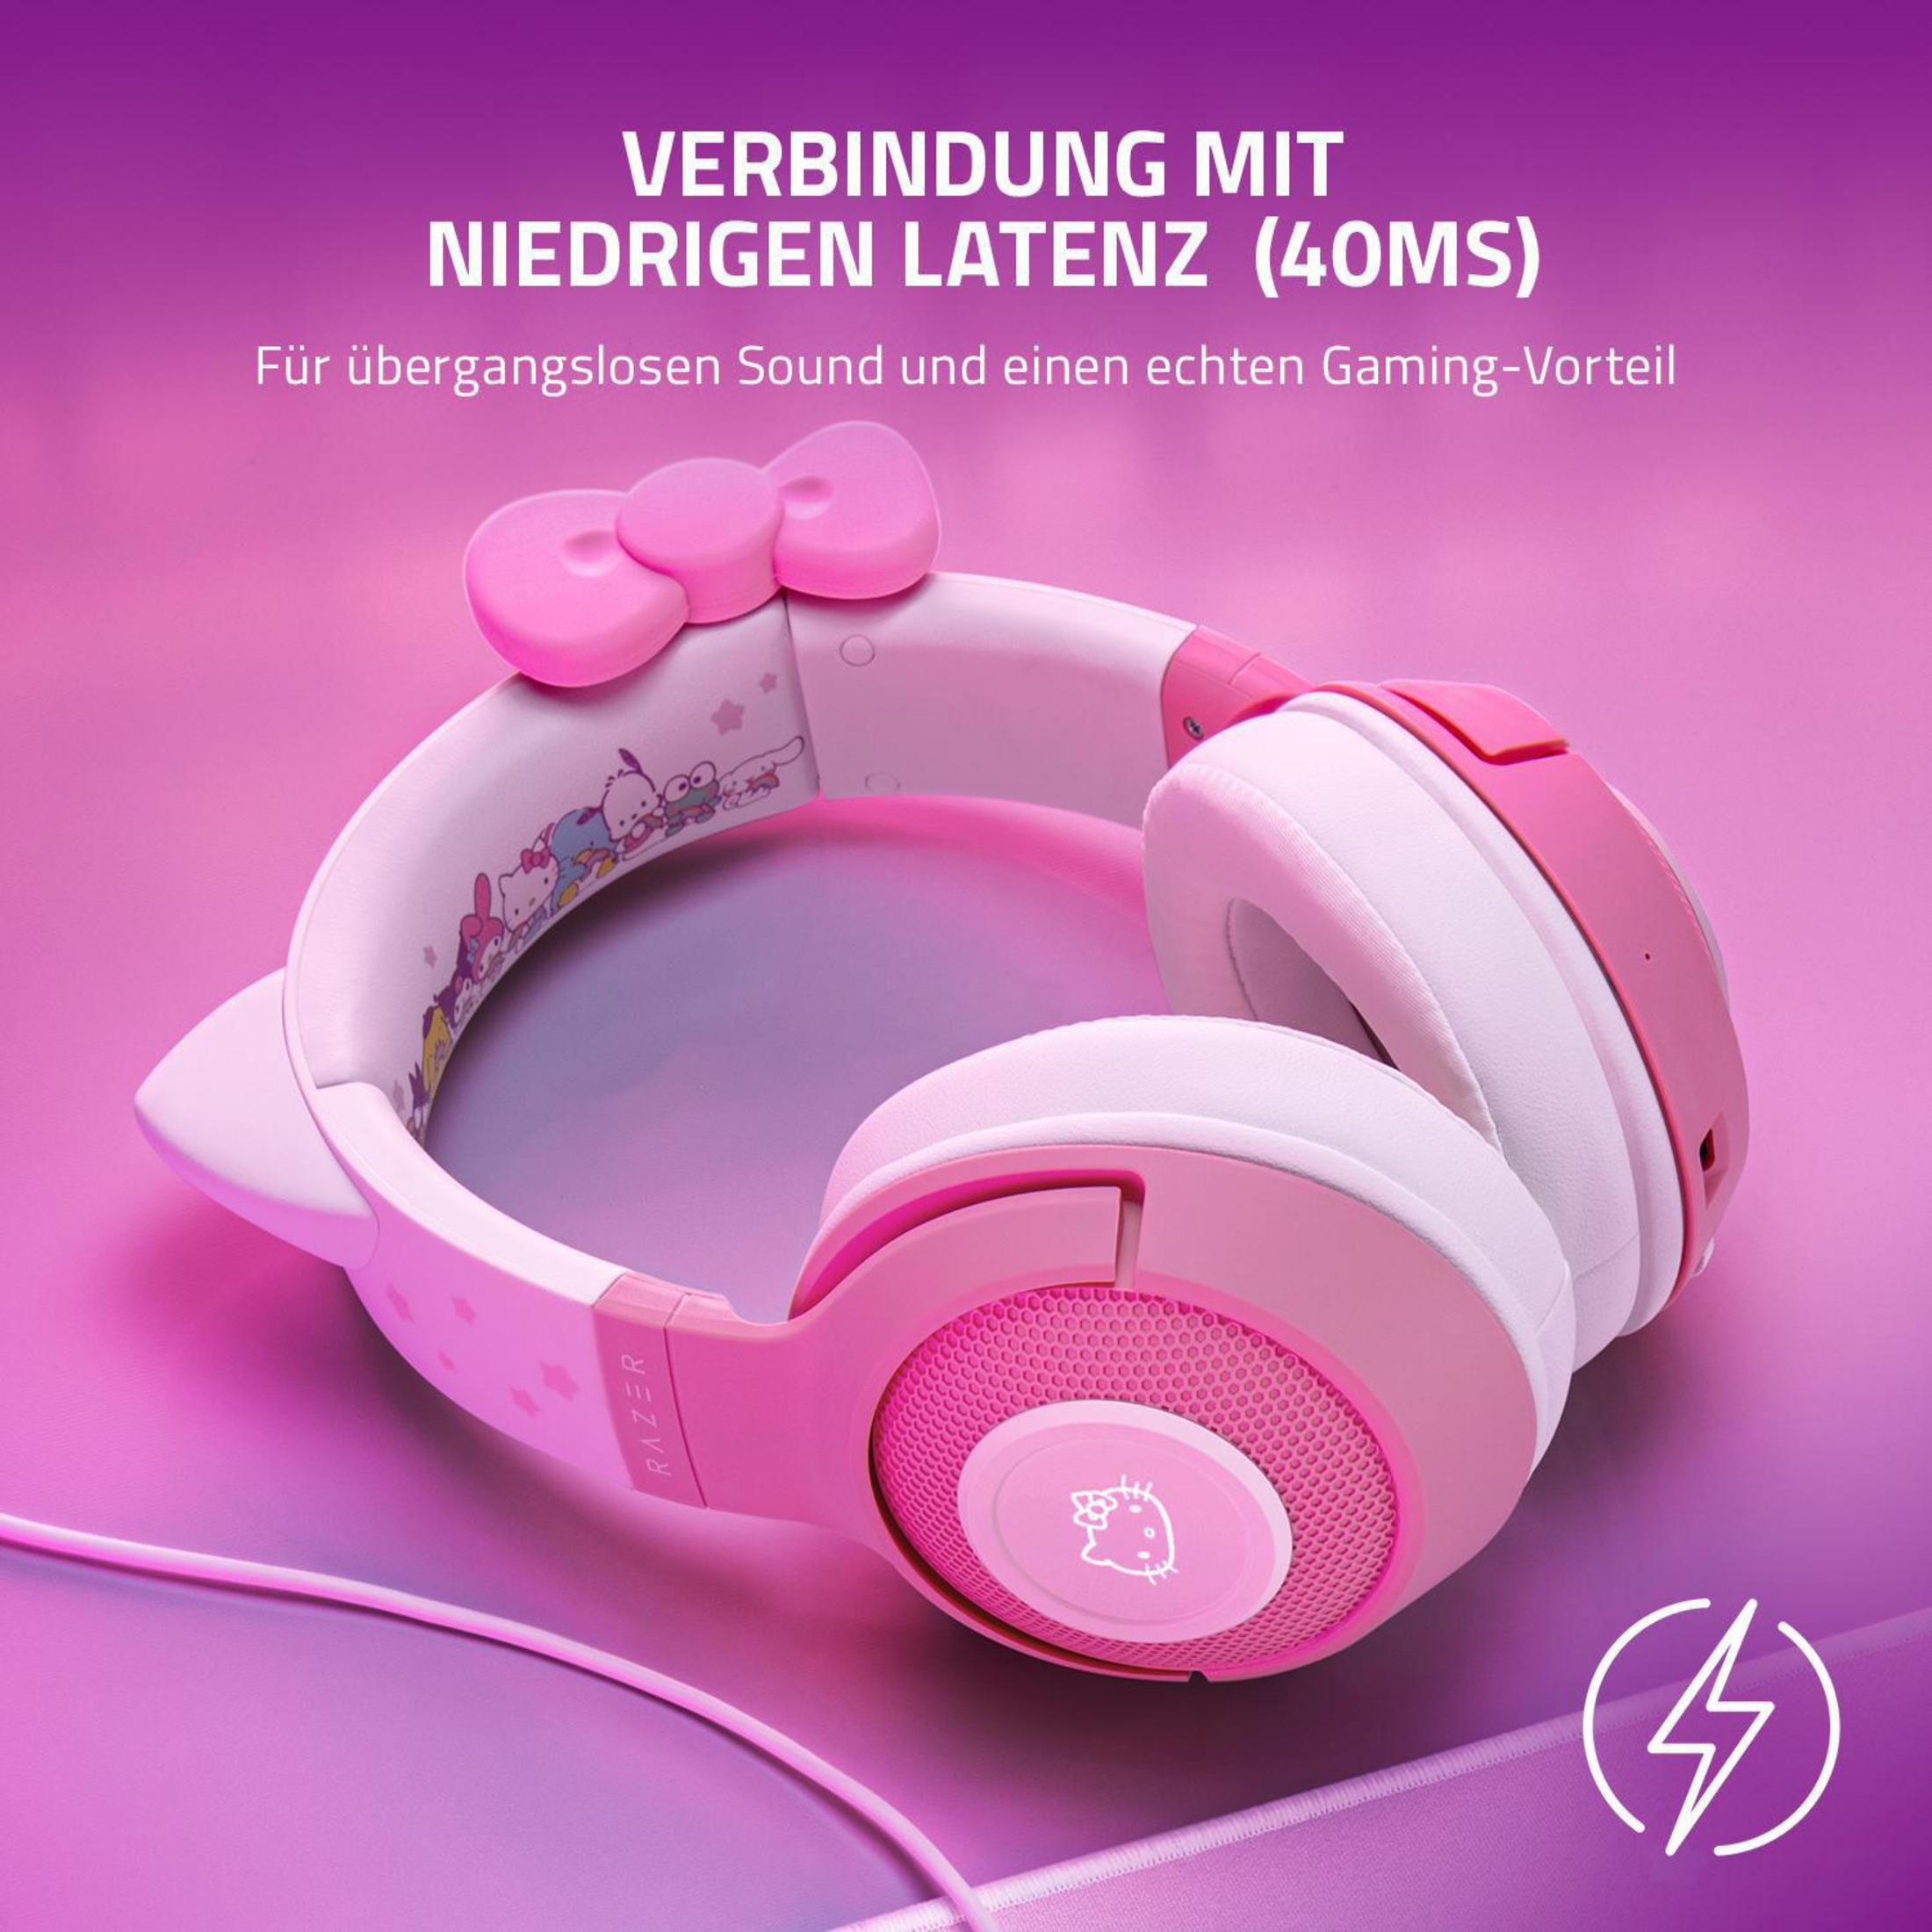 KITTY HELLO Bluetooth RZ04-03520300-R3M1 KRAKEN Over-ear ED., Pink Headset BT RAZER / Quartz